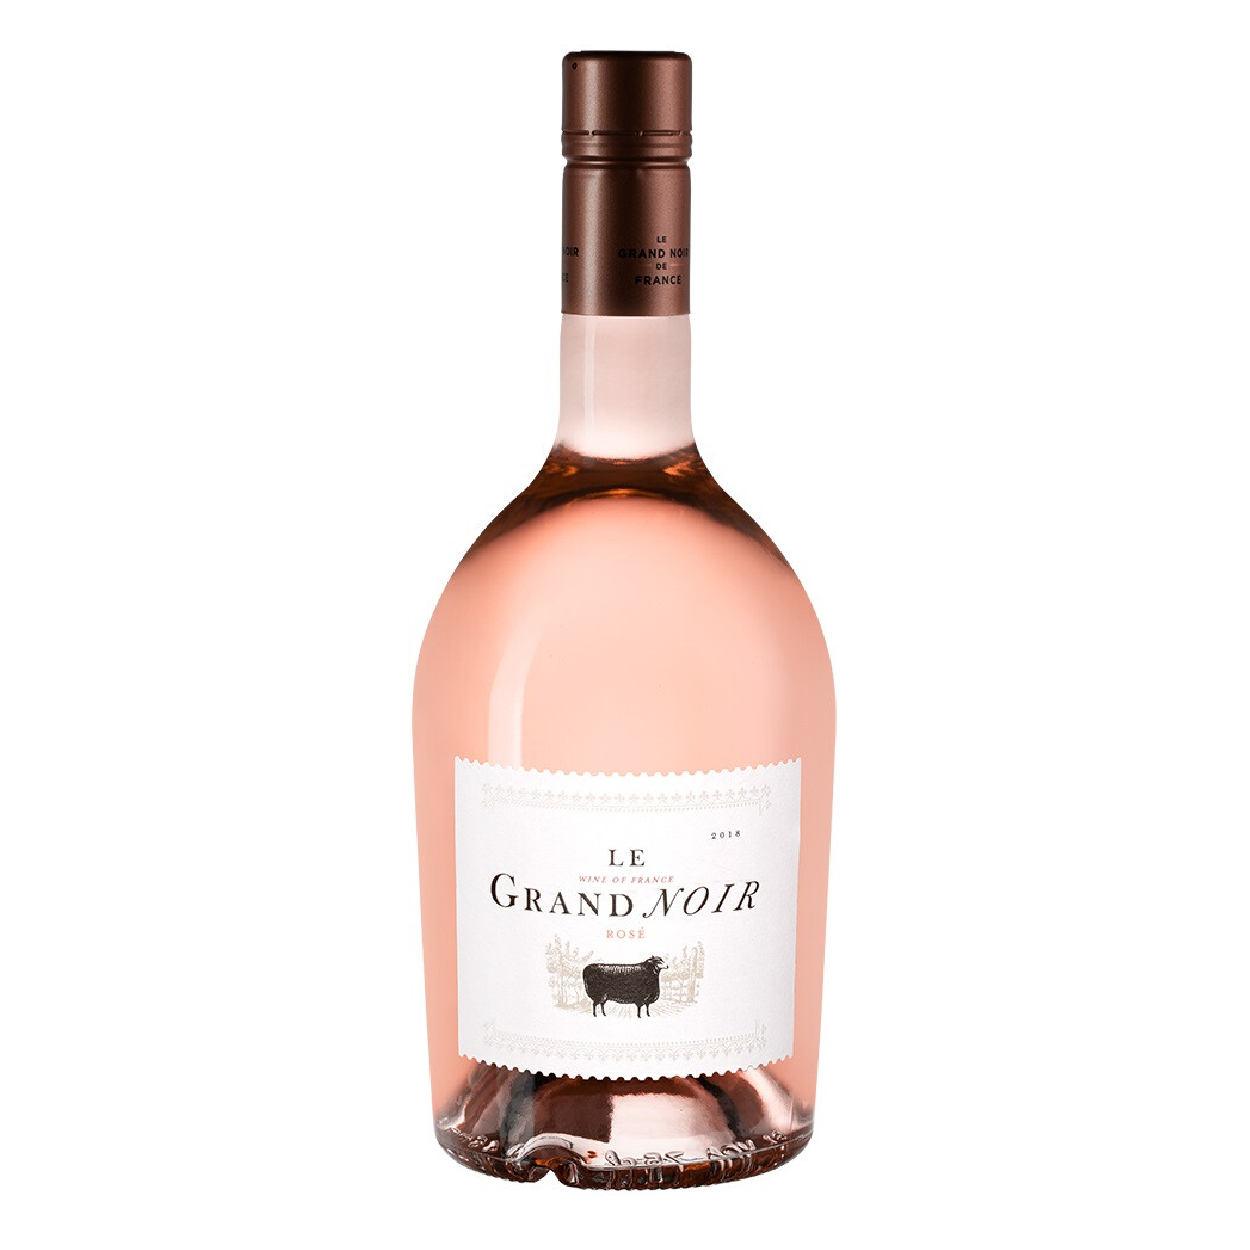 Legrand noir. Ле Гран Нуар Розе вино. Ле Гранд Ноир вино розовое. Вино Ле Гран Нуар Розе роз сух. Legrand Noir Syrah вино.